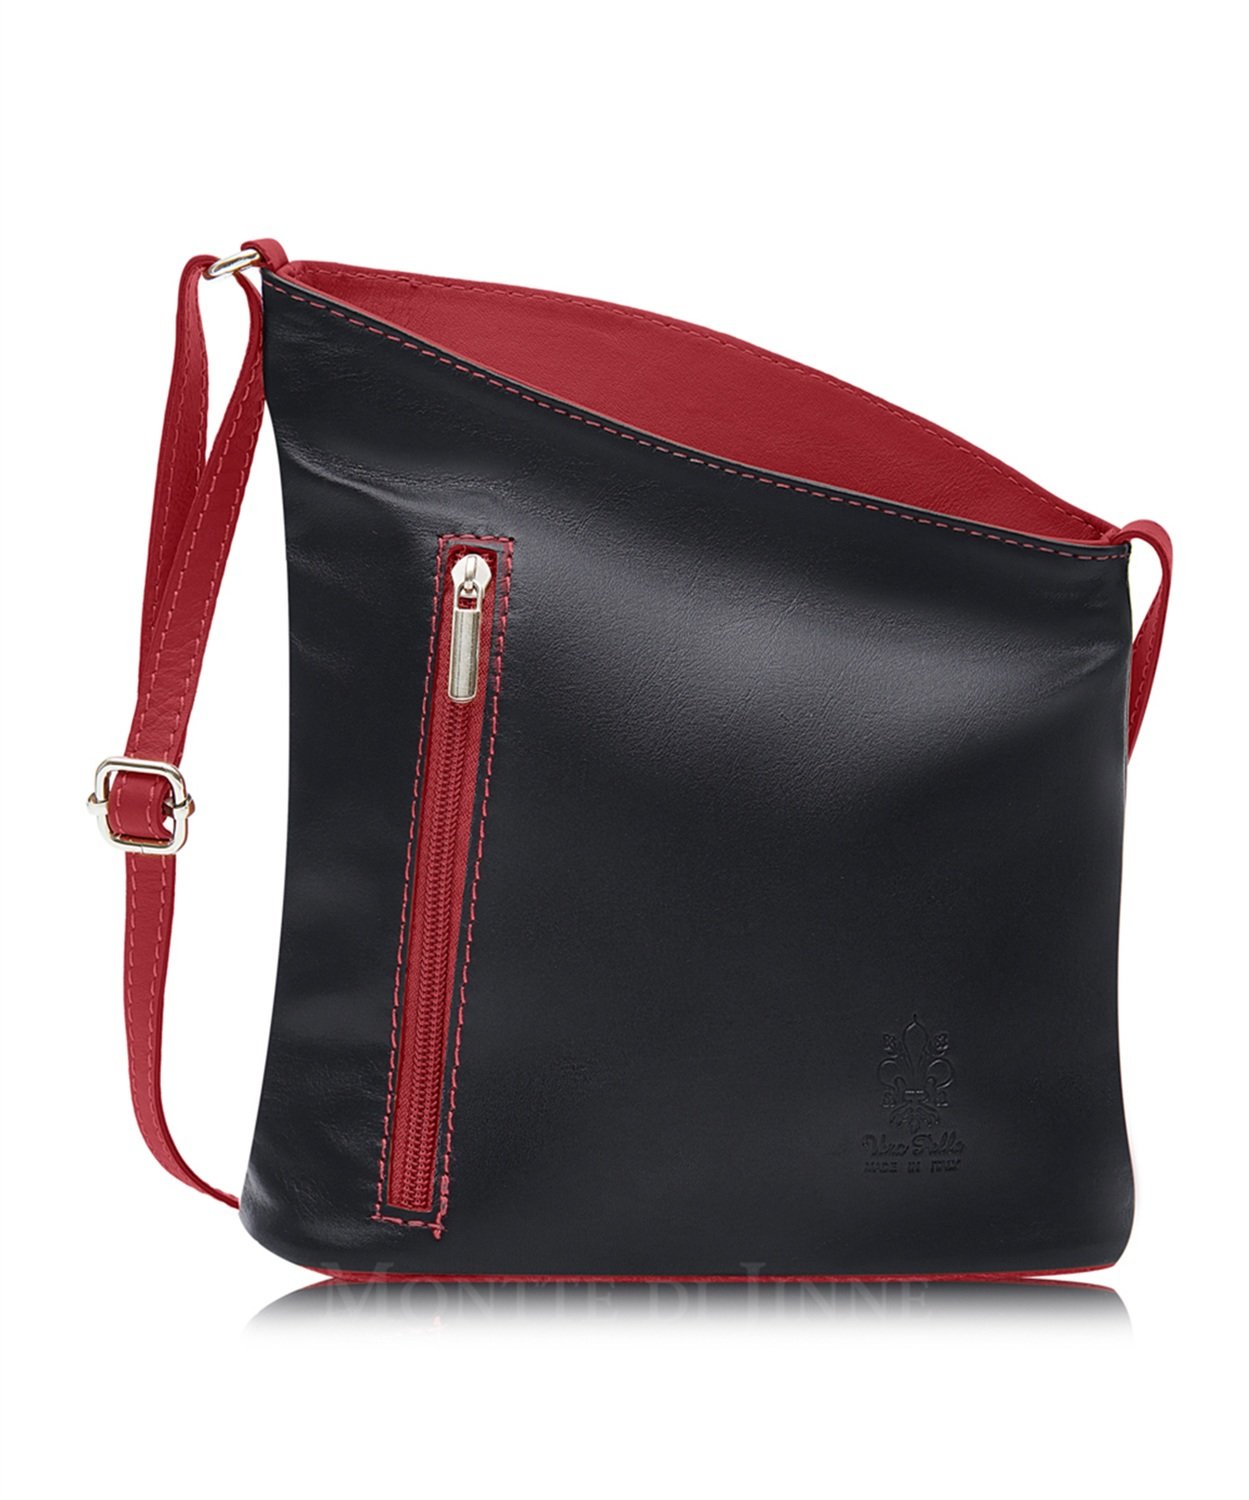 Black With Red Trim Soft Leather Angled Shoulder Bag 